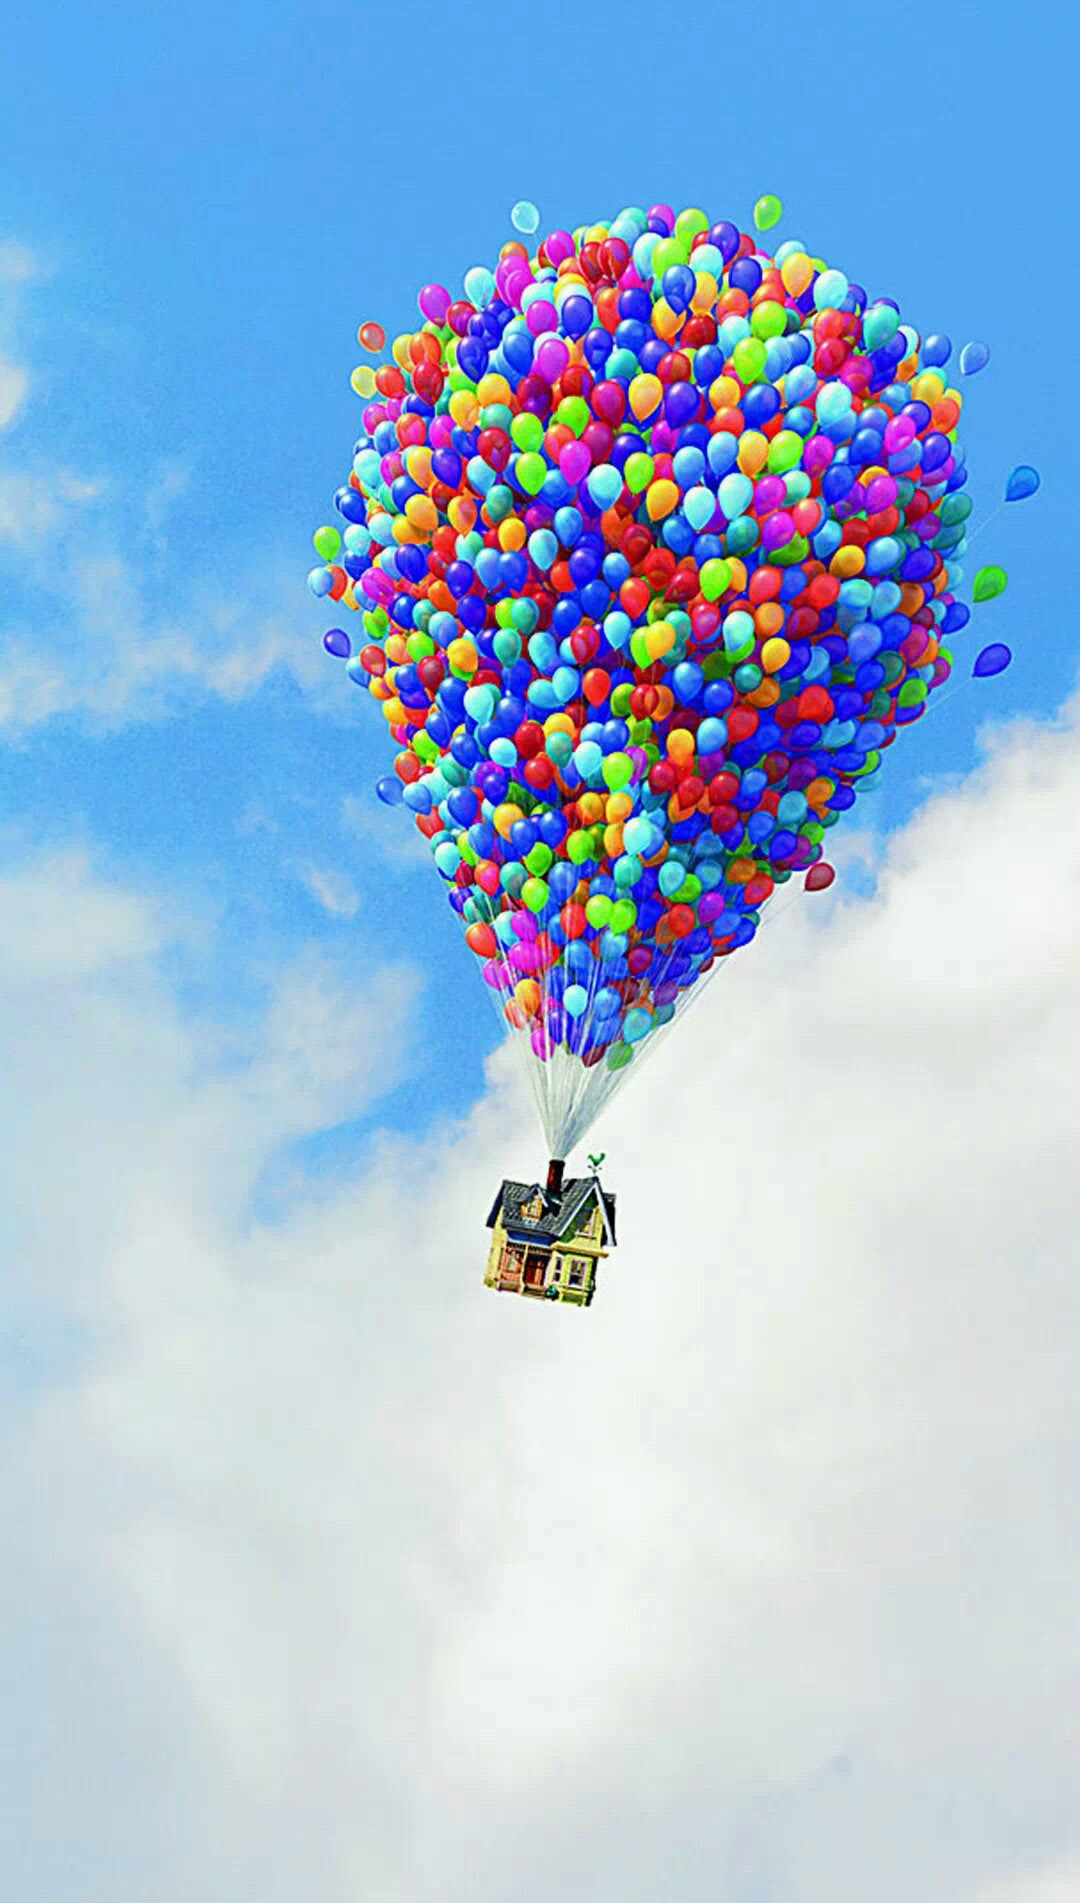 samsung mobile wallpaper,heißluftballon fahren,heißluftballon,ballon,himmel,fahrzeug